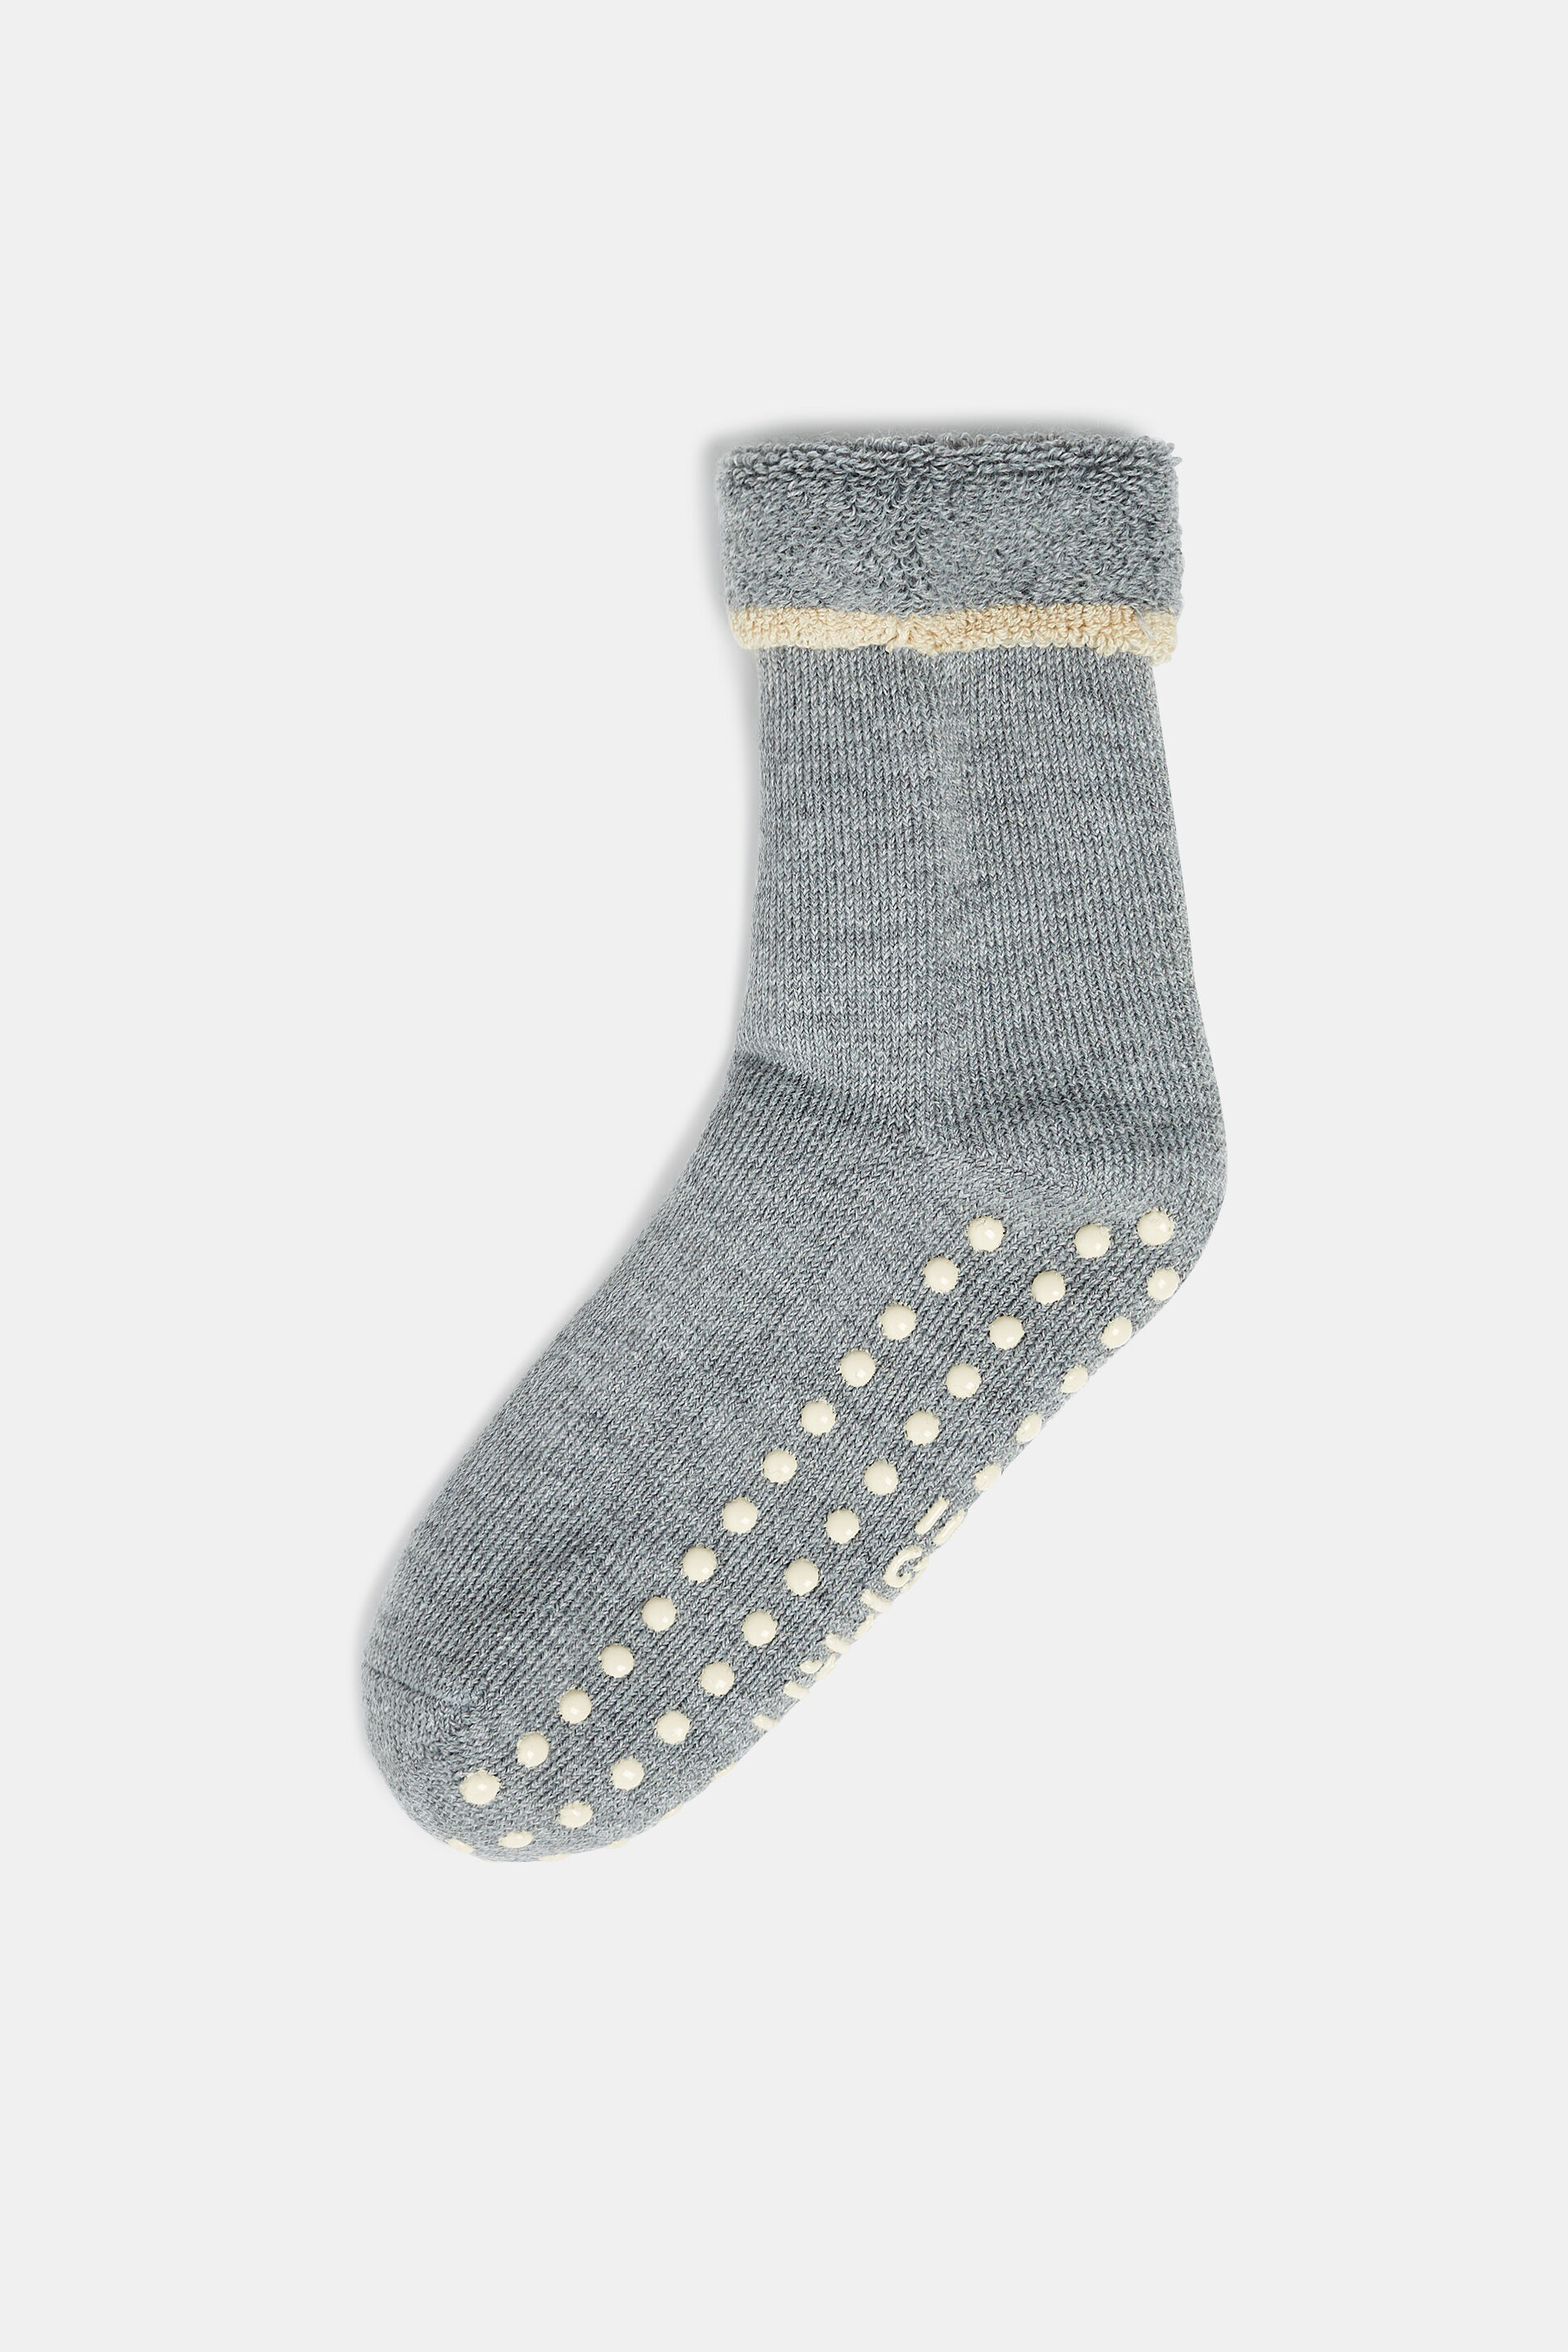 Esprit socks, stopper Soft blend wool